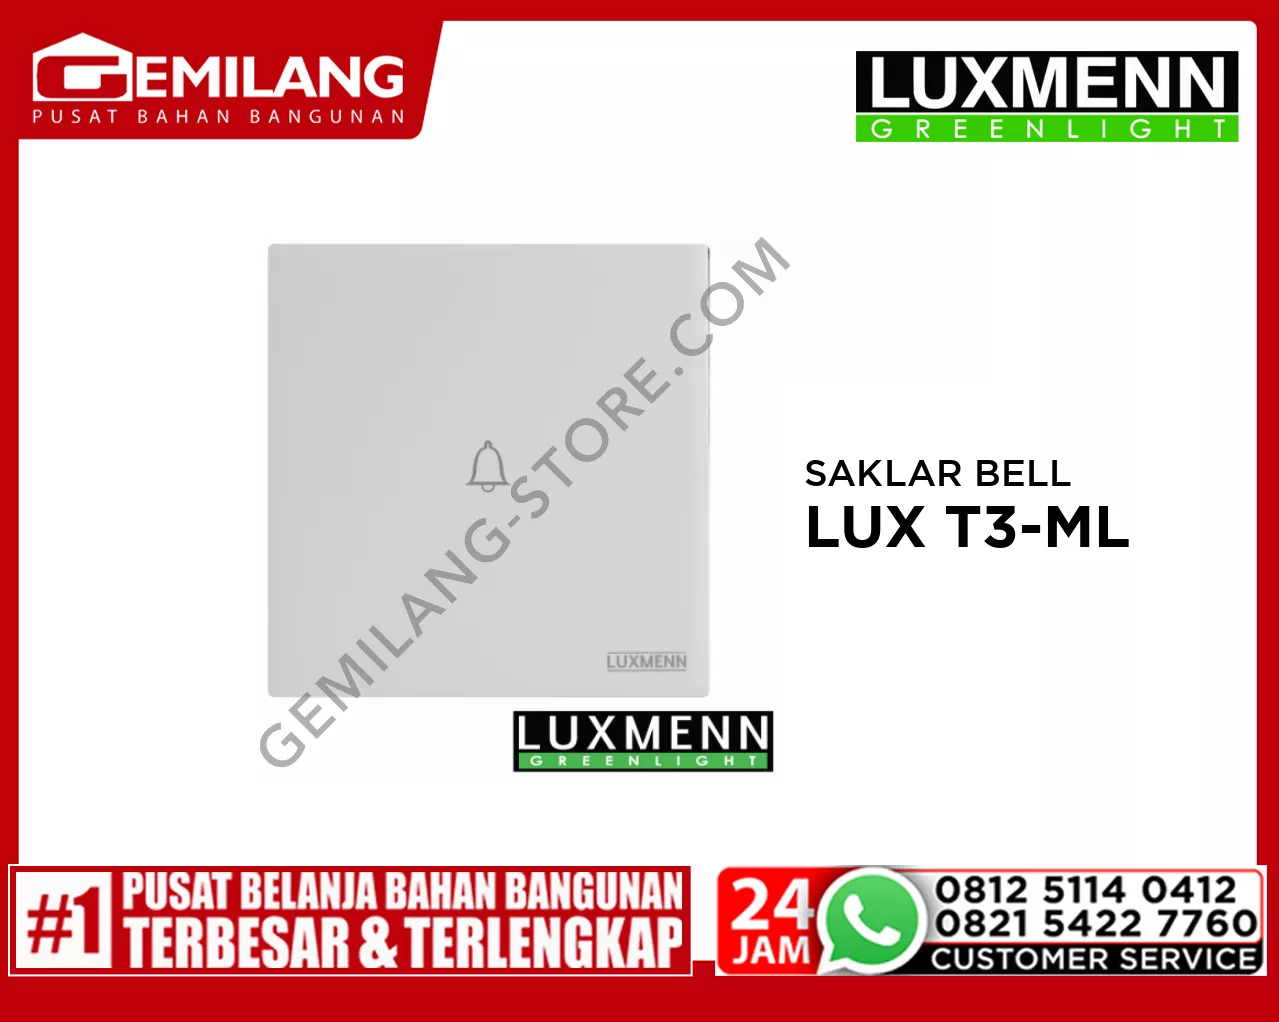 LUXMENN SAKLAR BELL LUX T3-ML WHITE